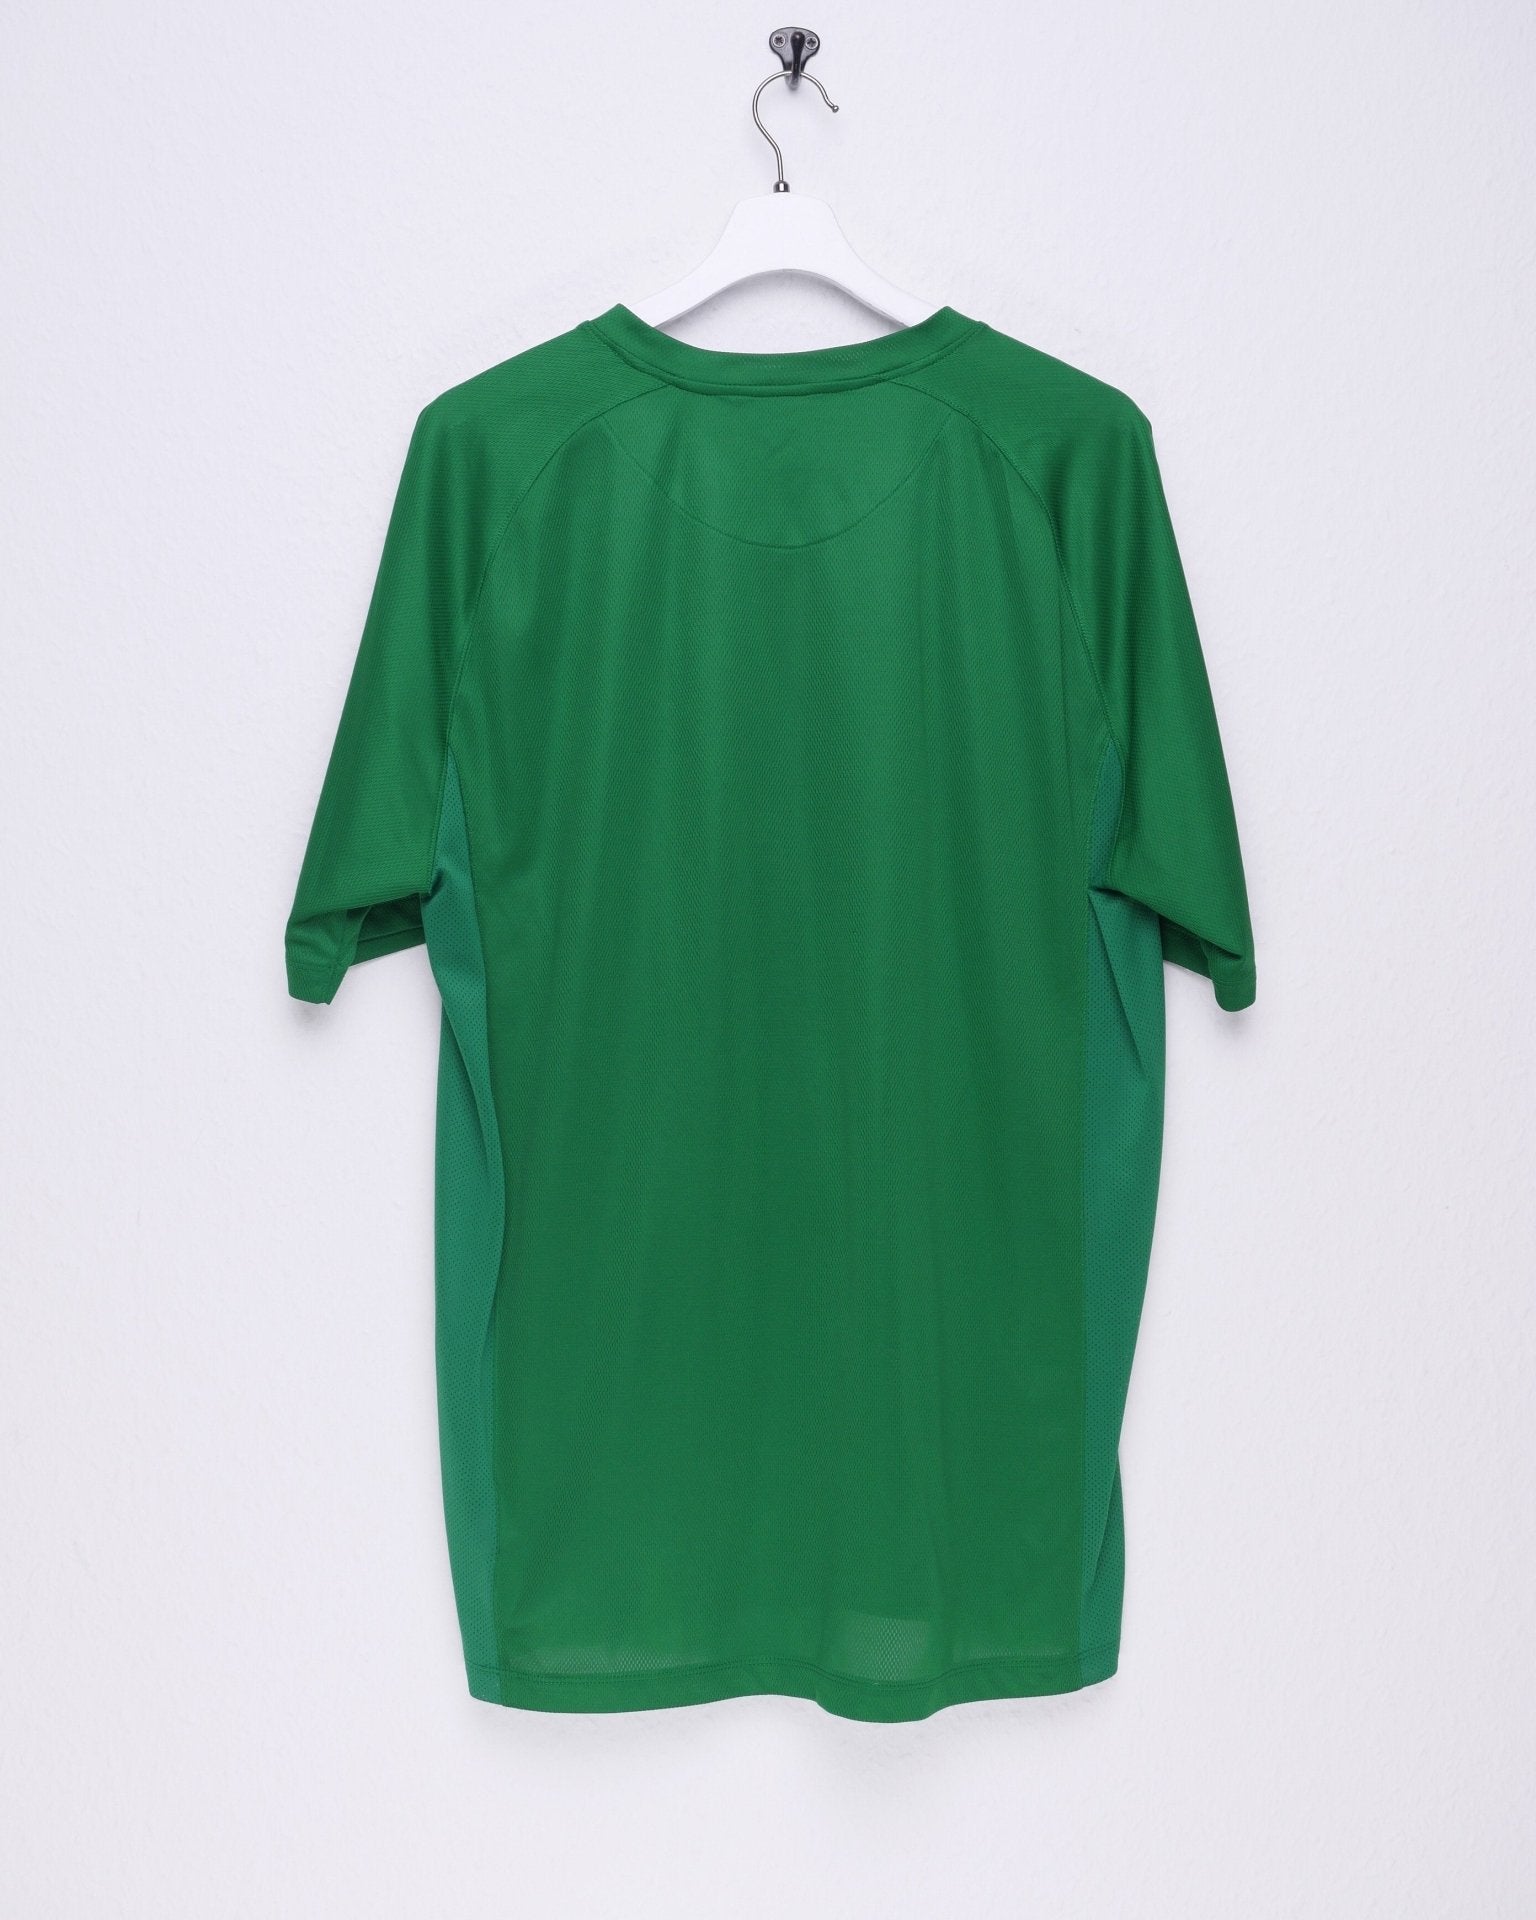 nike Werder Bremen embroidered Logo Soccer Jersey Shirt - Peeces